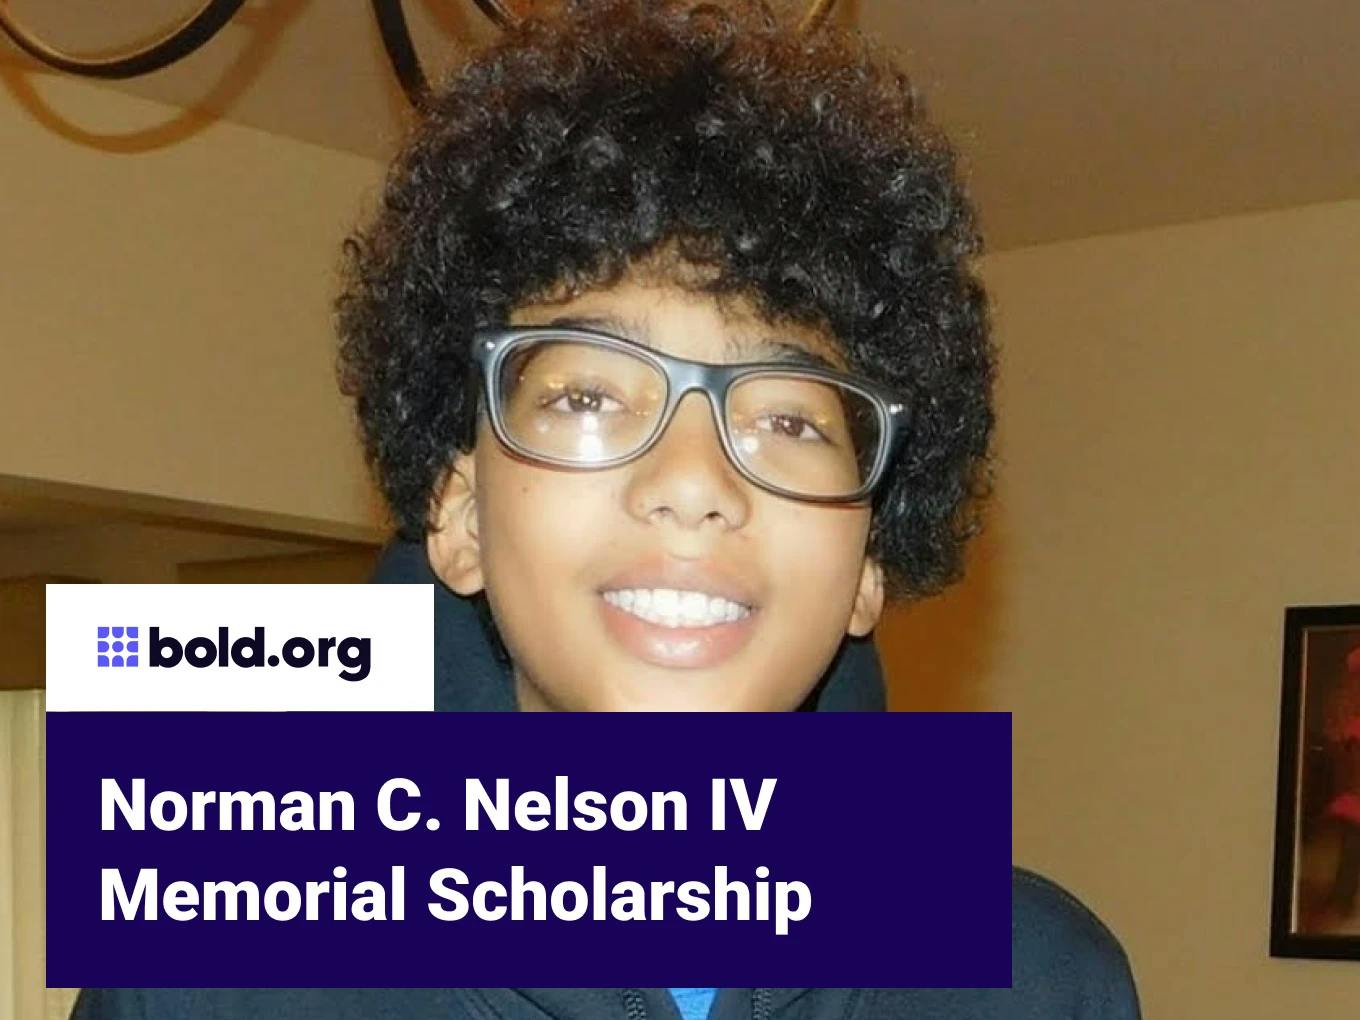 Norman C. Nelson IV Memorial Scholarship